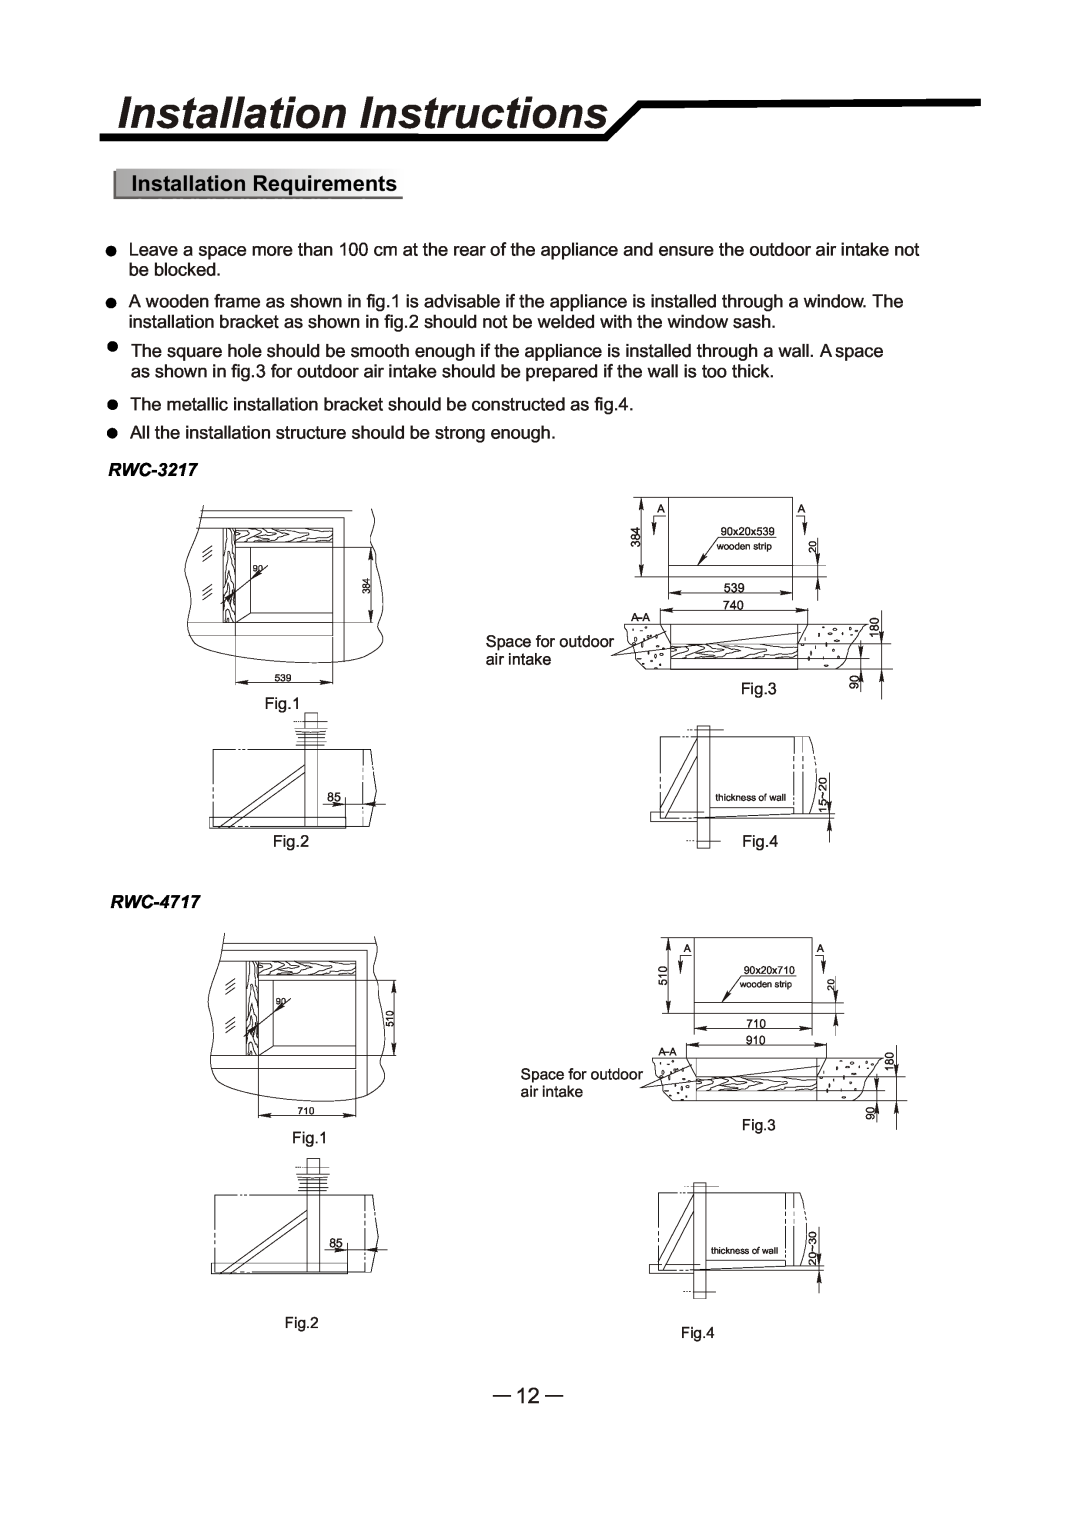 NEC RWC-4717 user manual Installation Instructions, Installation Requirements, RWC-3217 